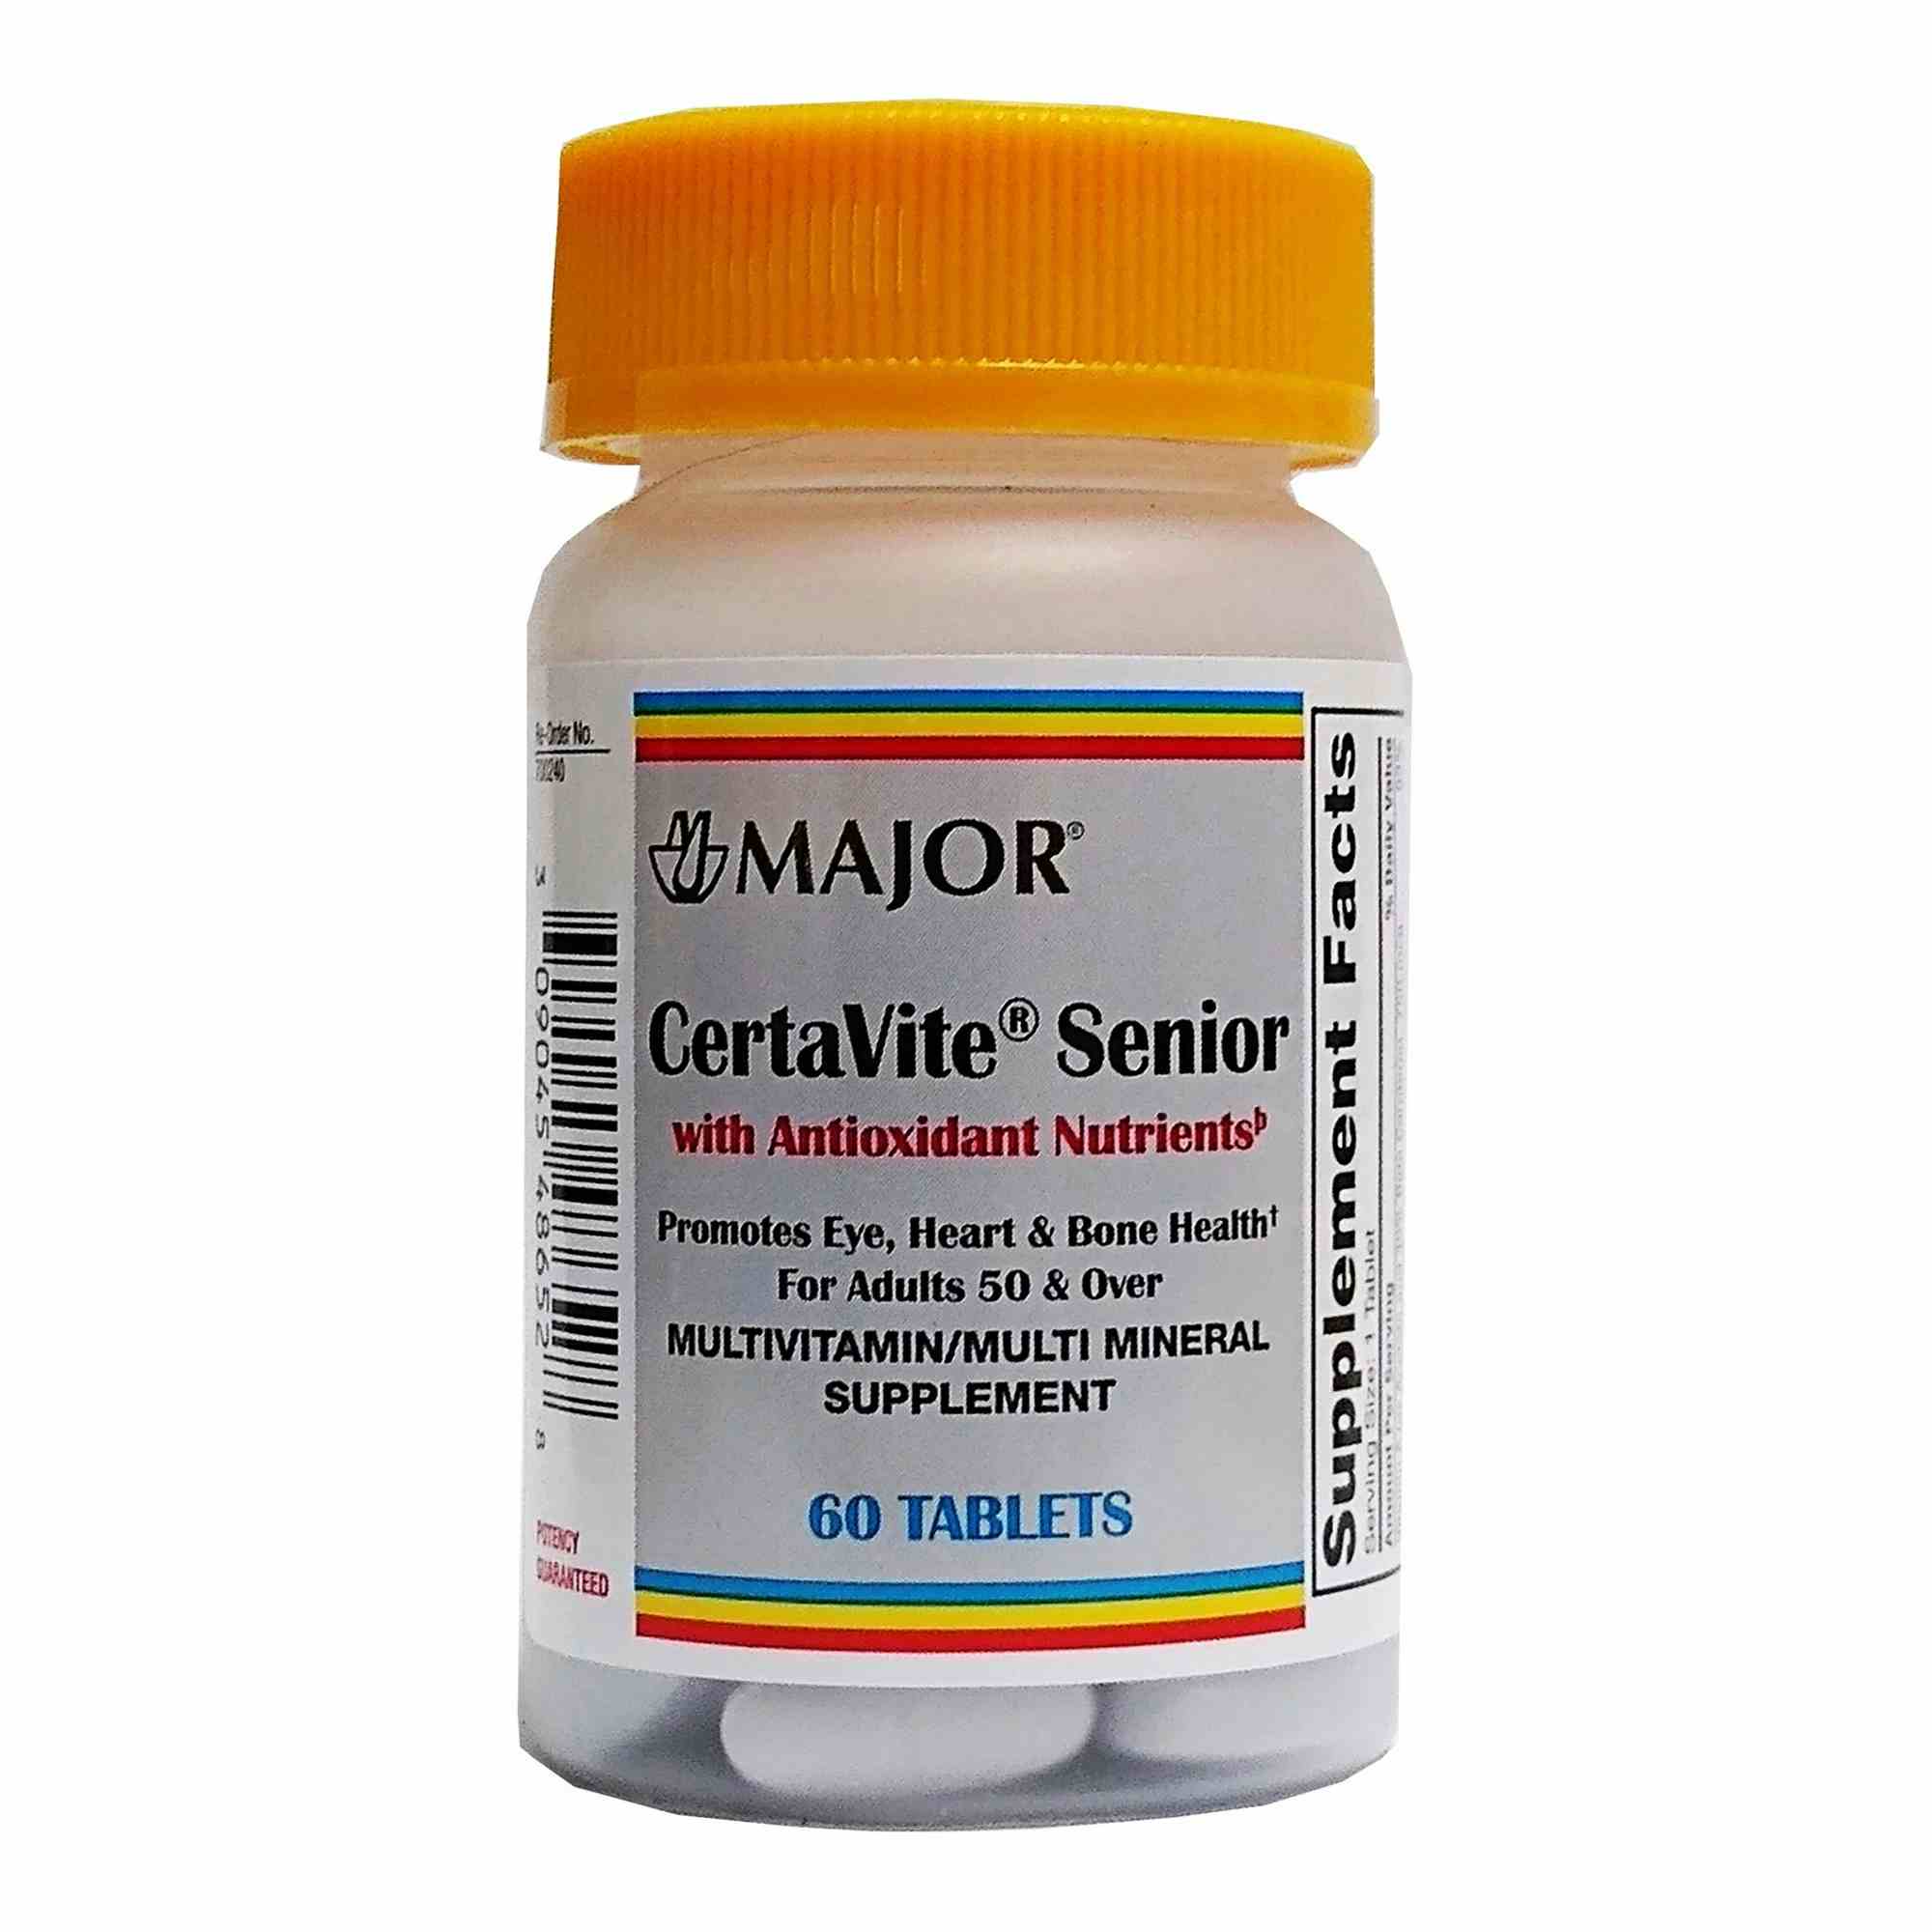 CertaVite Senior Multivitamin Supplement